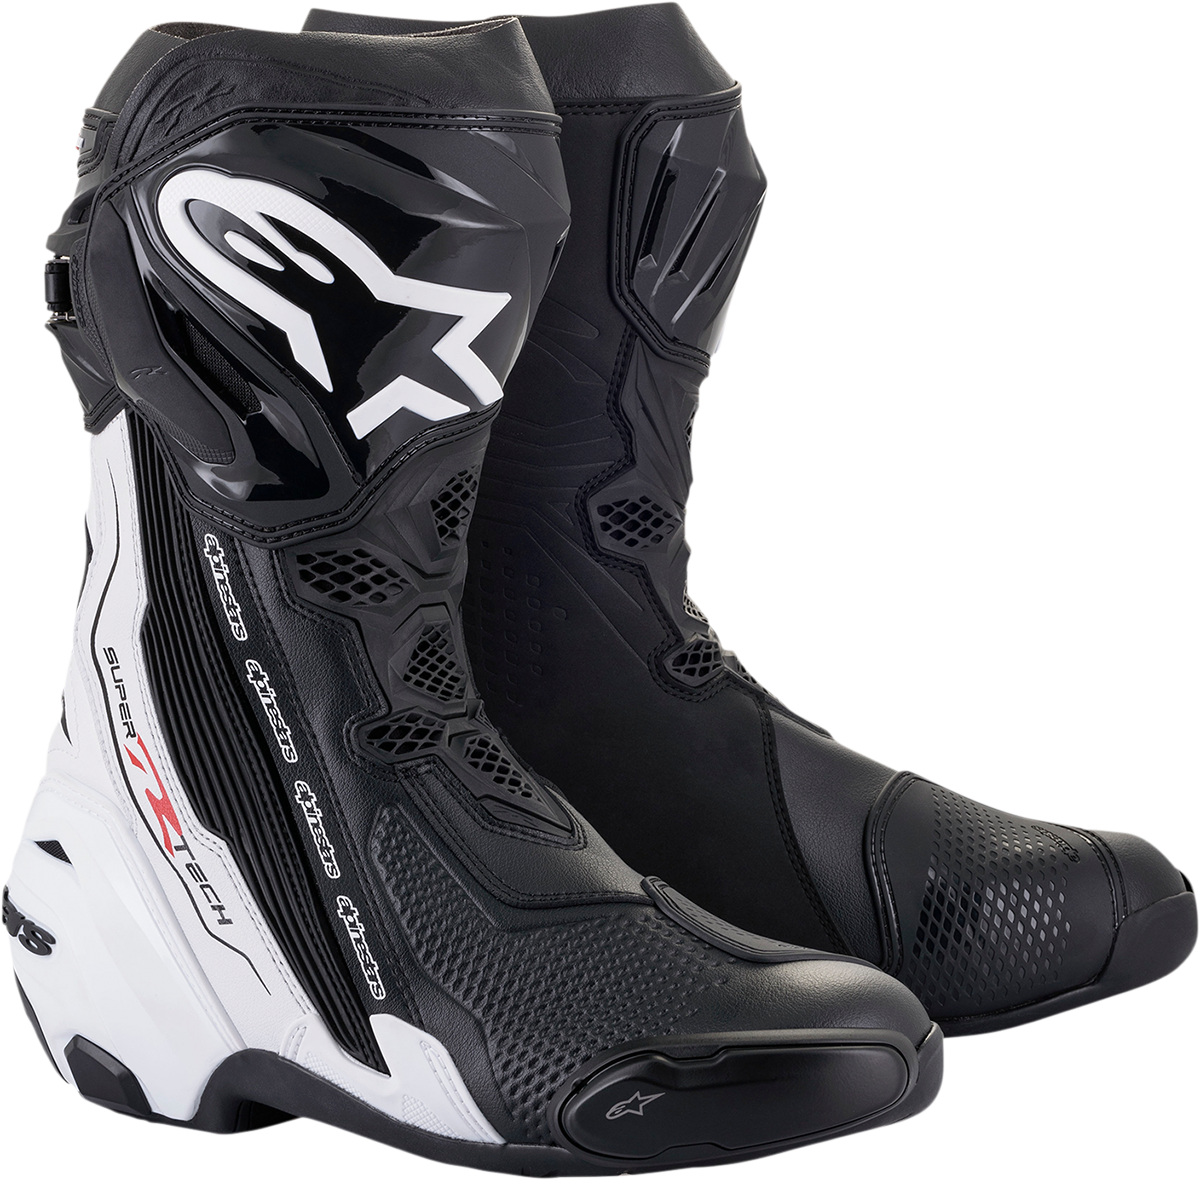 ALPINESTARS Supertech R Boots - Black/White - US 7.5 / EU 41 2220021-12-41